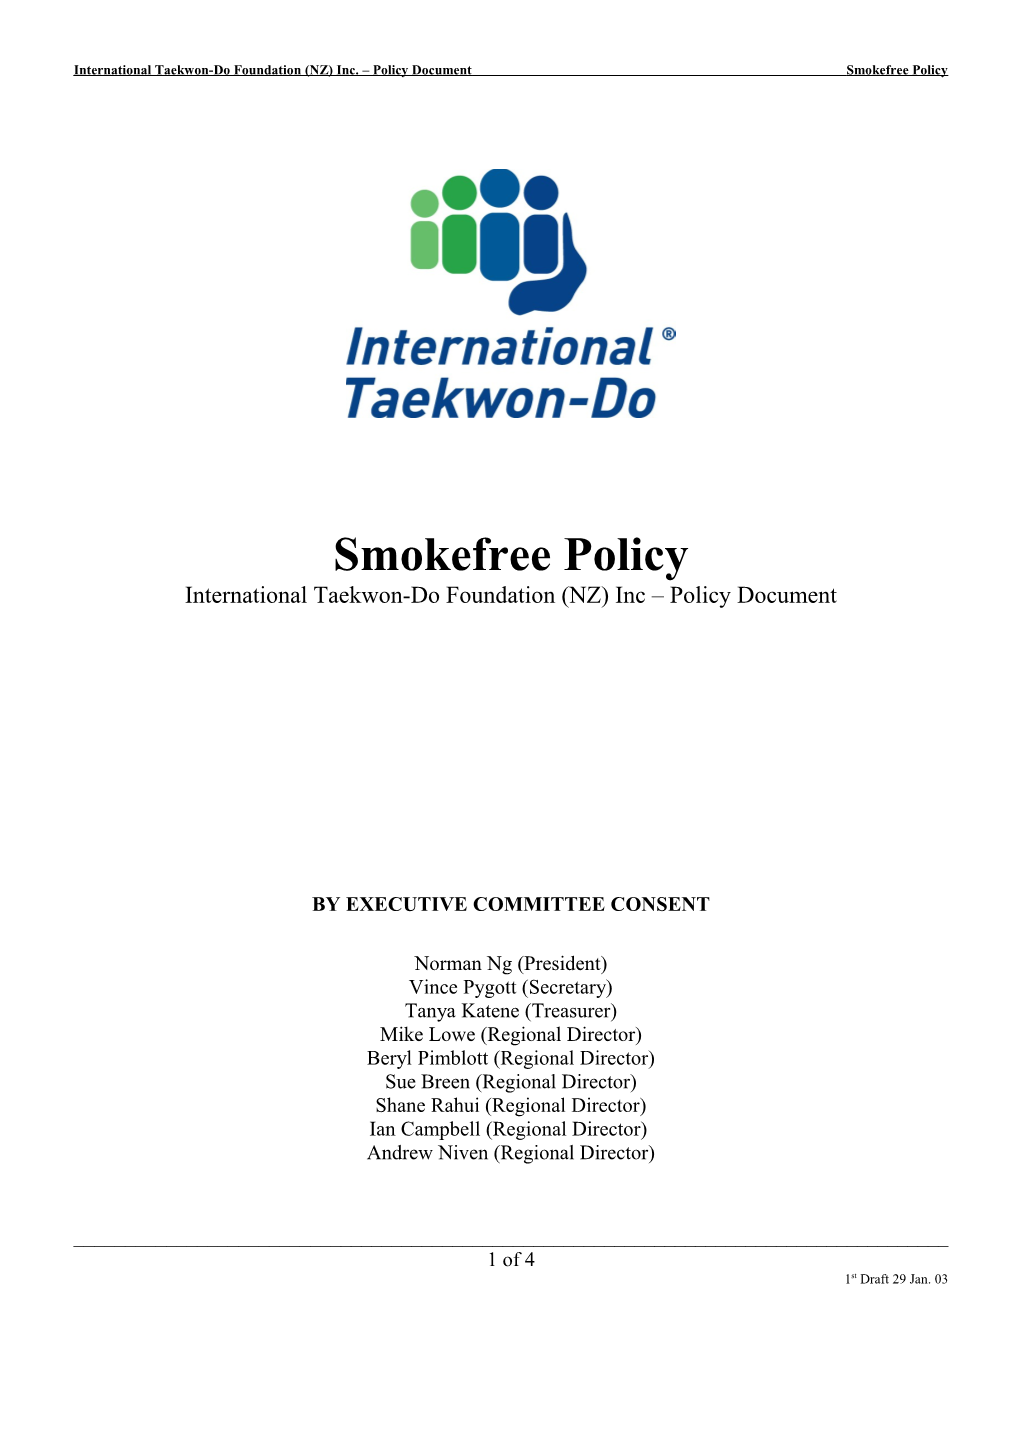 Smoke Free Policy